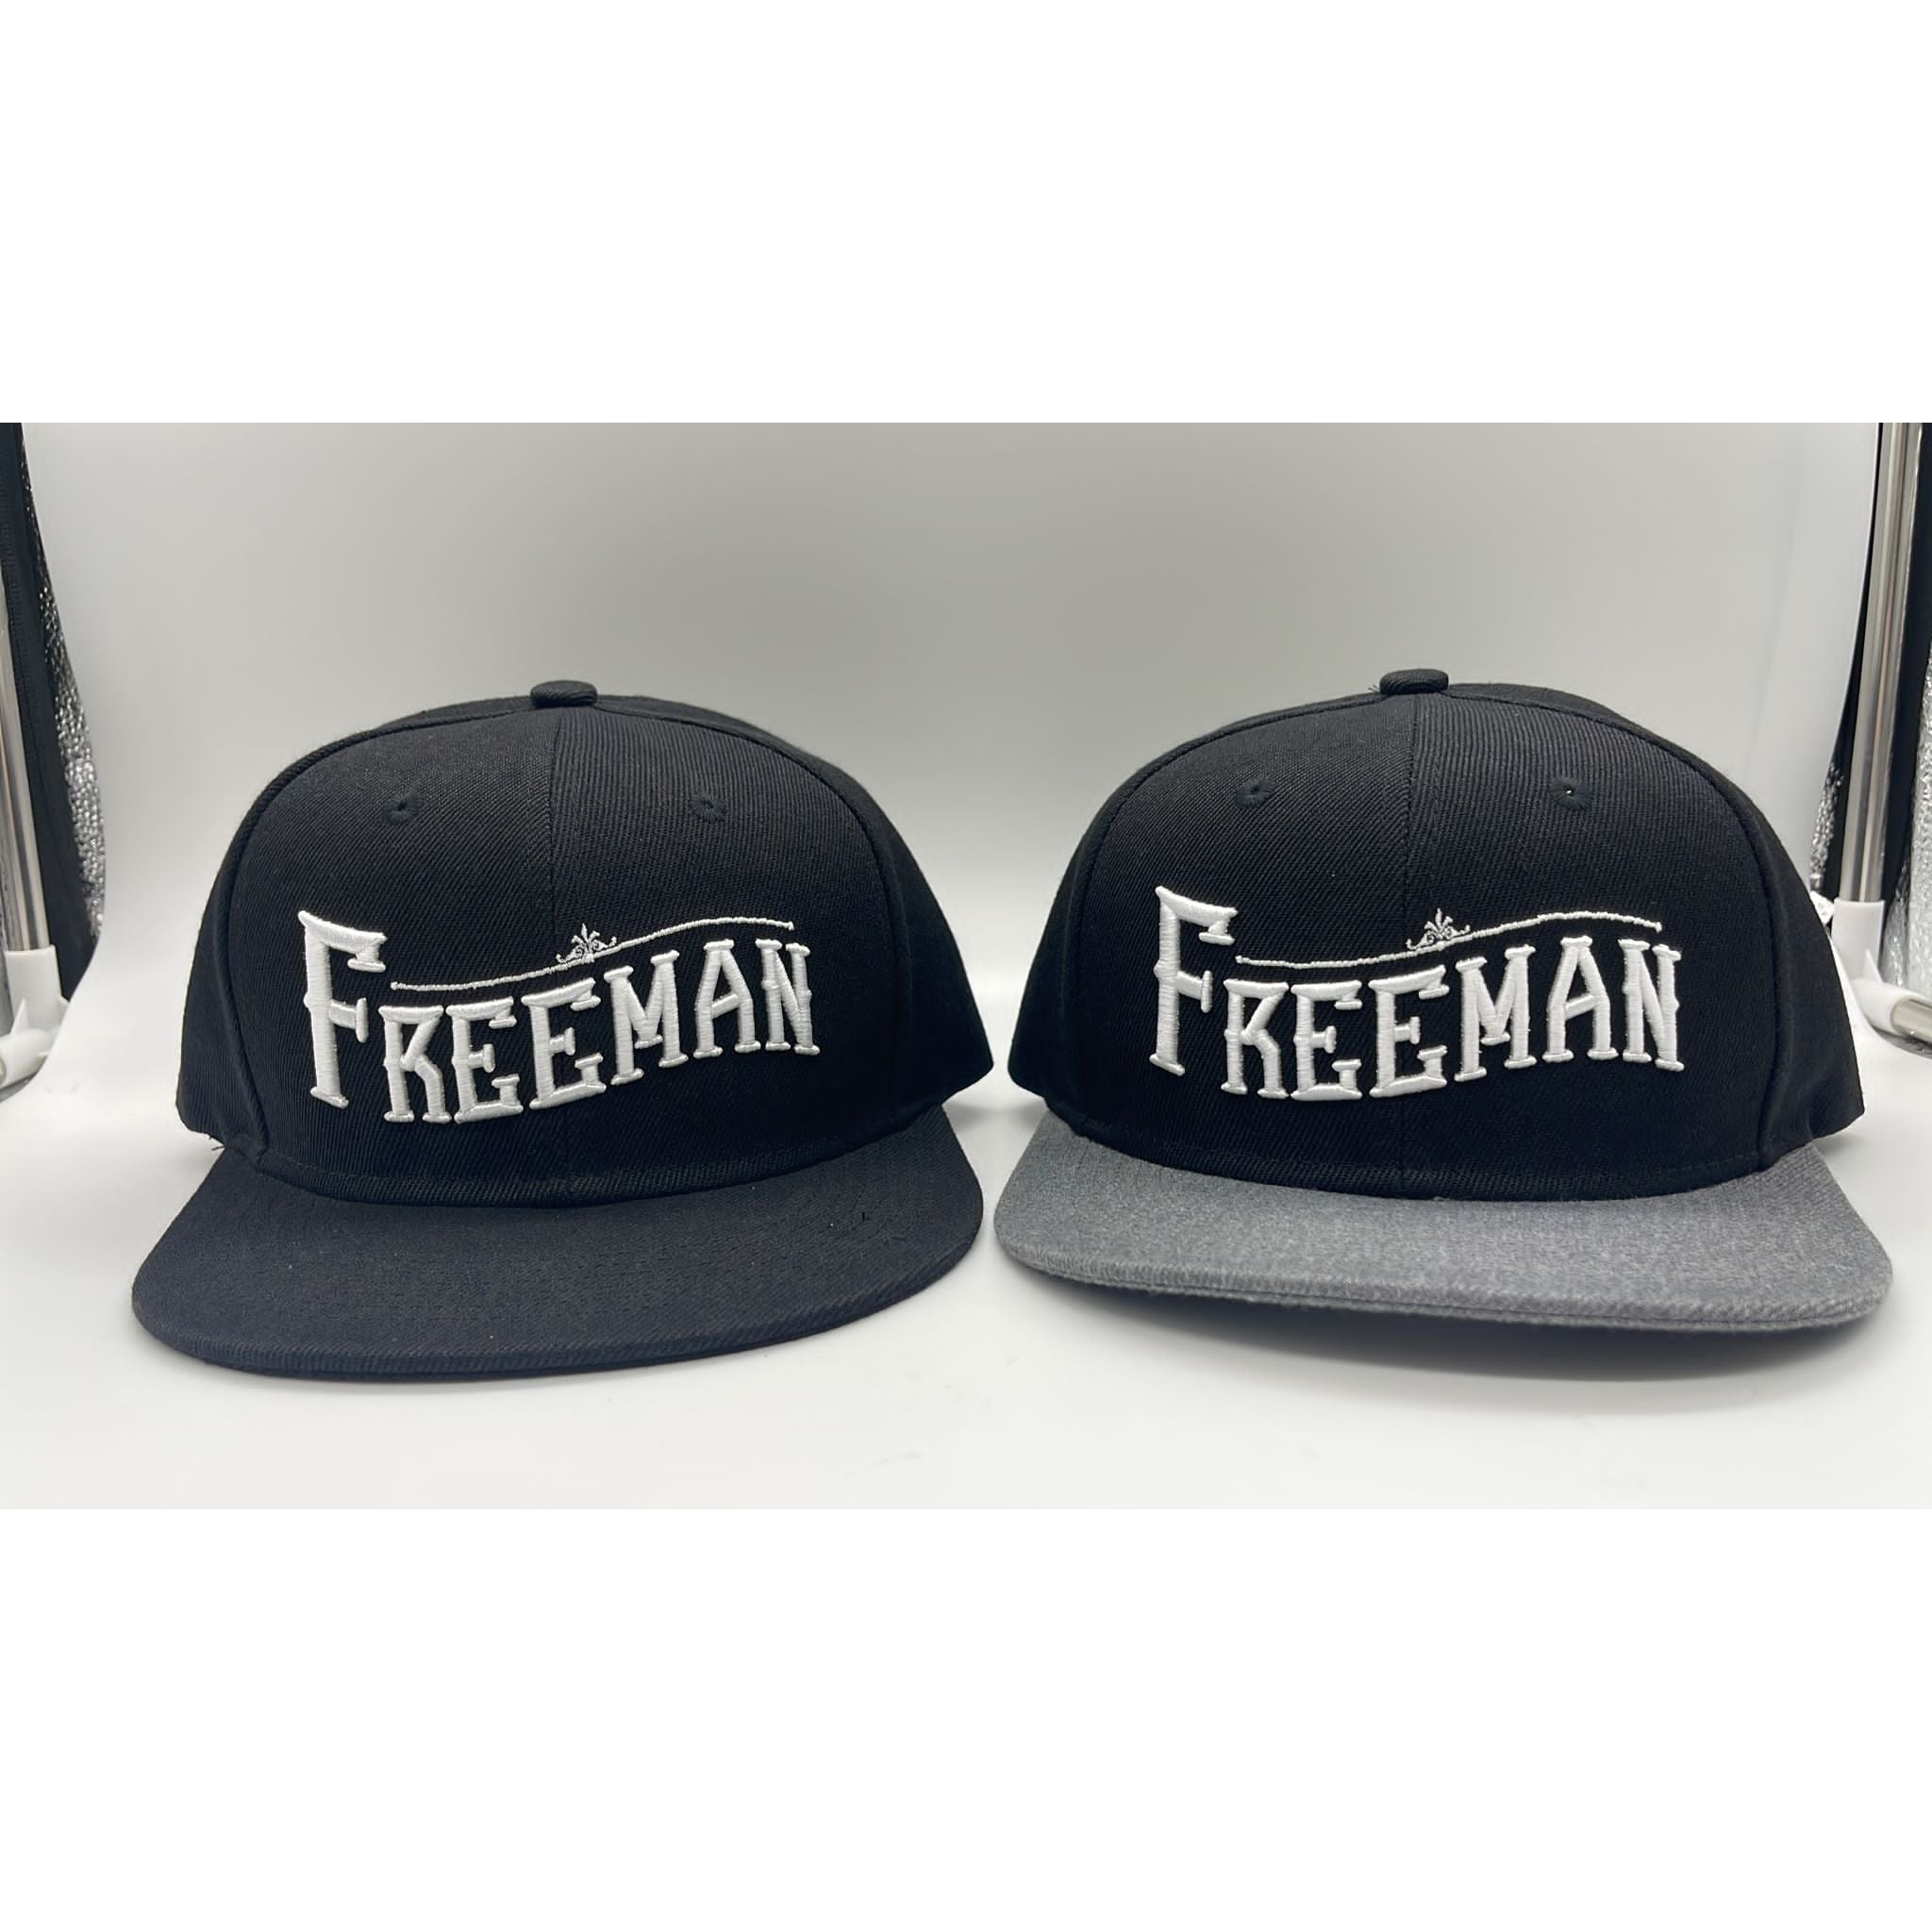 Freeman Hat - Vaping Merch